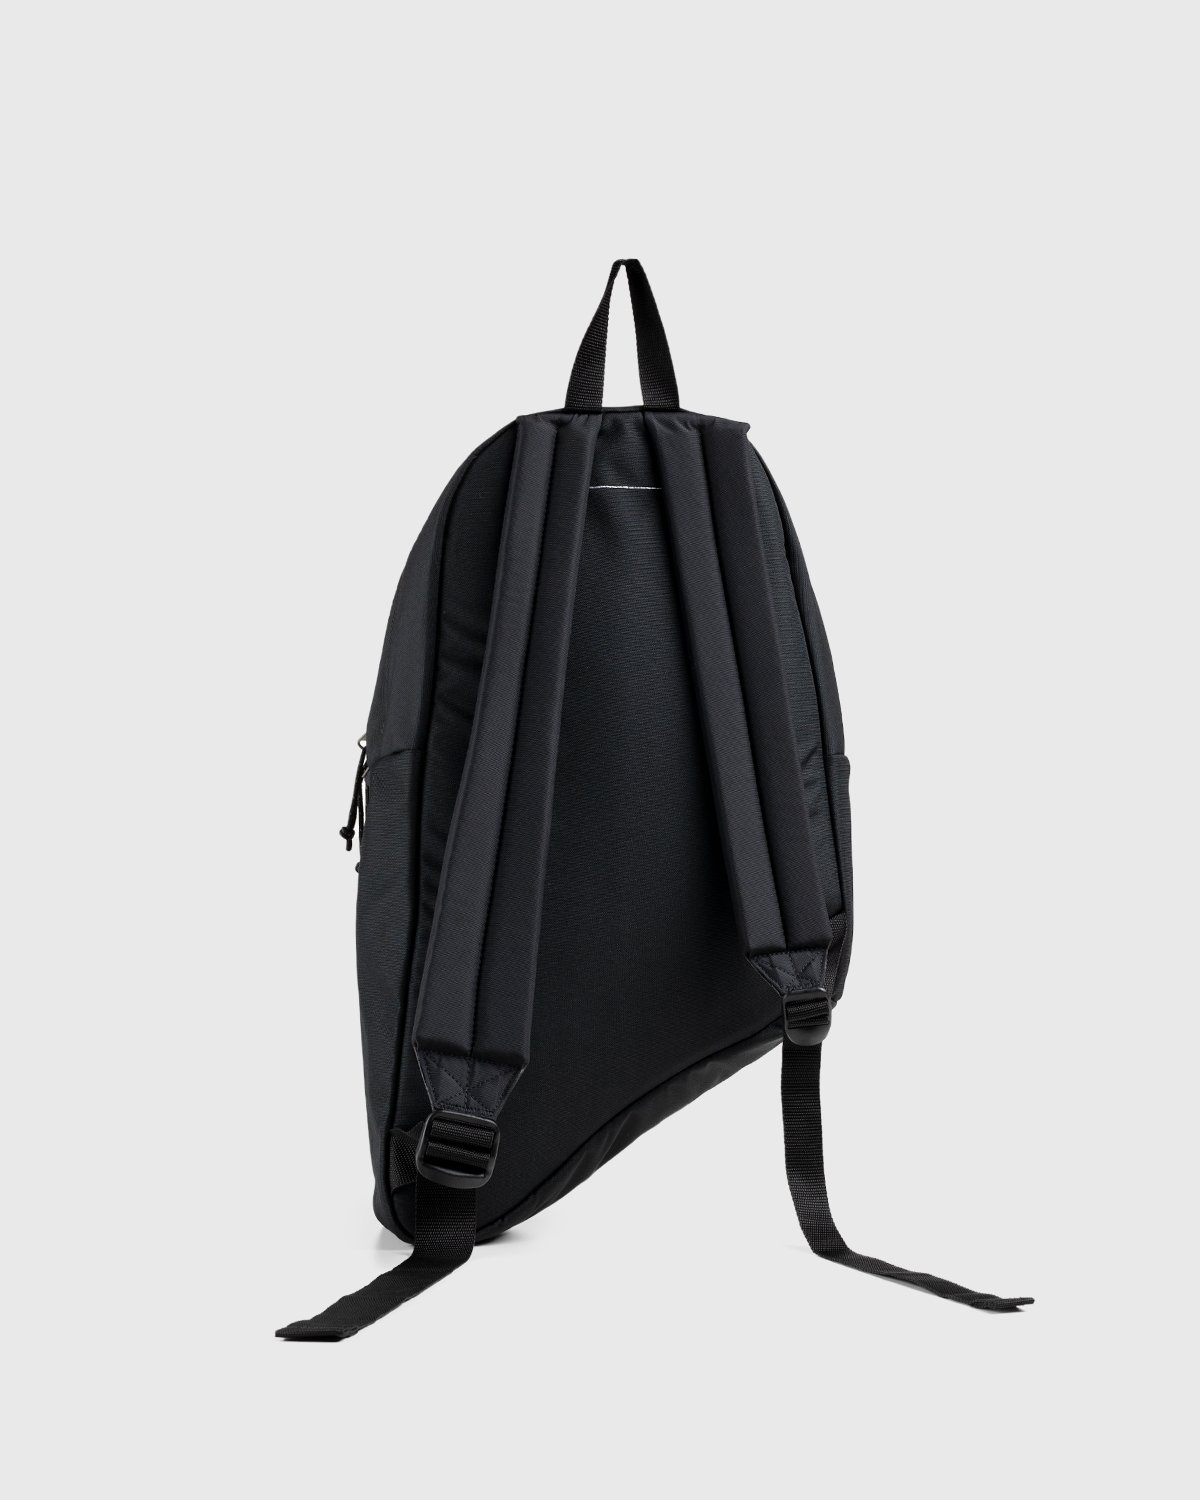 MM6 Maison Margiela x Eastpak - Zaino Backpack Black - Accessories - Black - Image 3